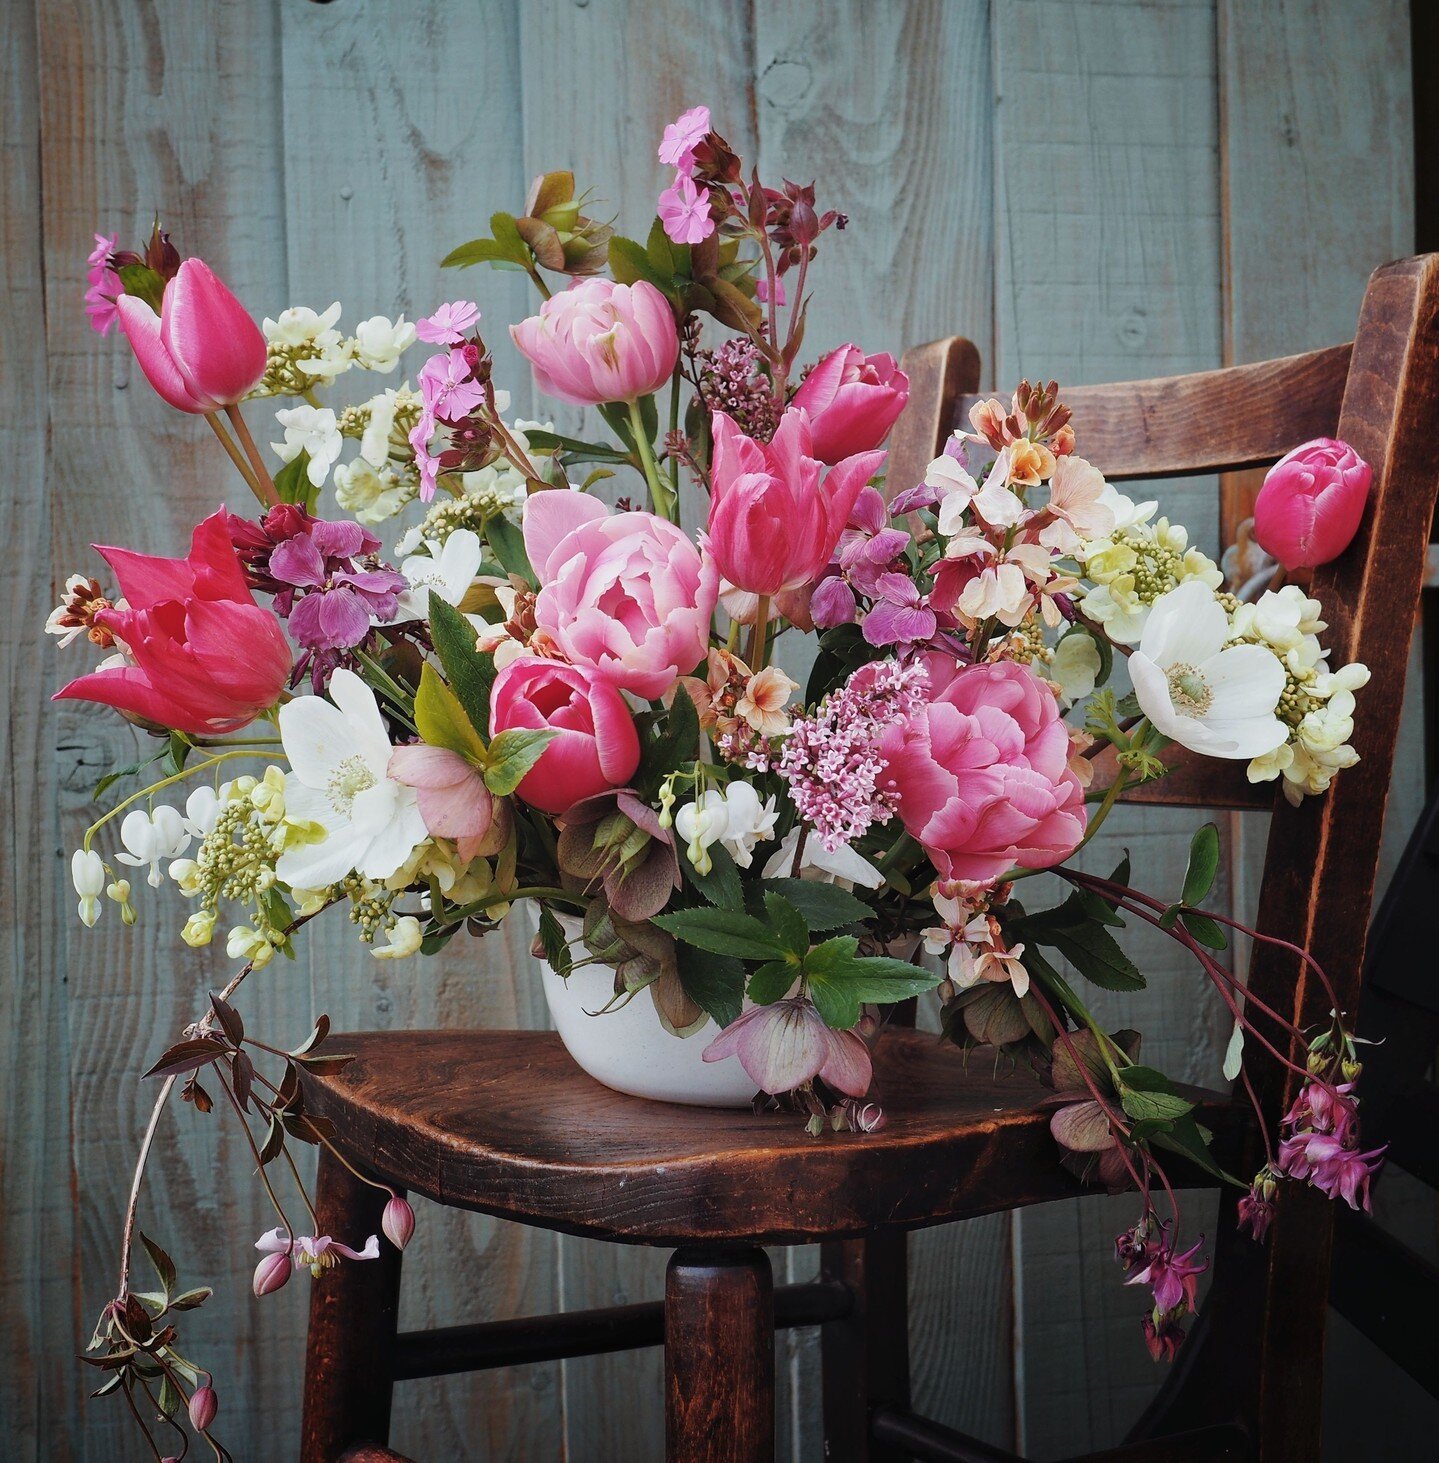 Spring Centrepieces 💗 🌺 🌸 
#britishflowers #seasonalfloweralliance #flowersfromthefarm #grownnotflown